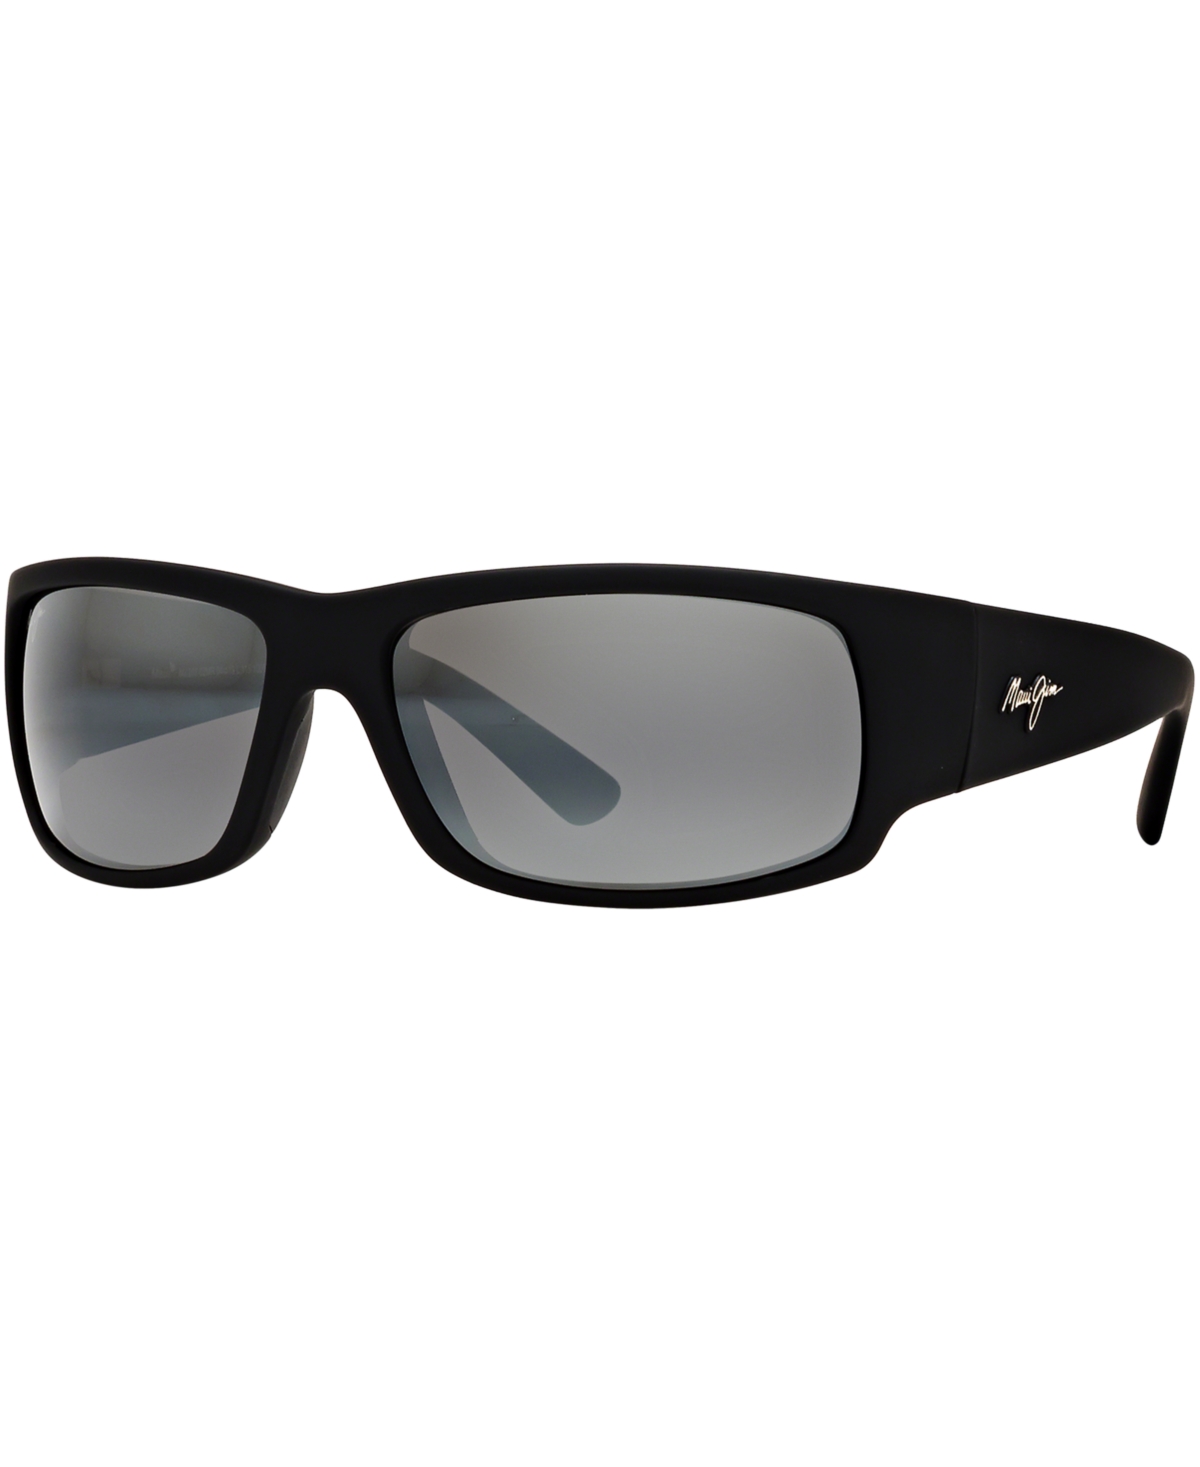 Maui Jim World Cup Nuetral Grey Wrap Mens Sunglasses 266-02mr 64 In Black / Grey